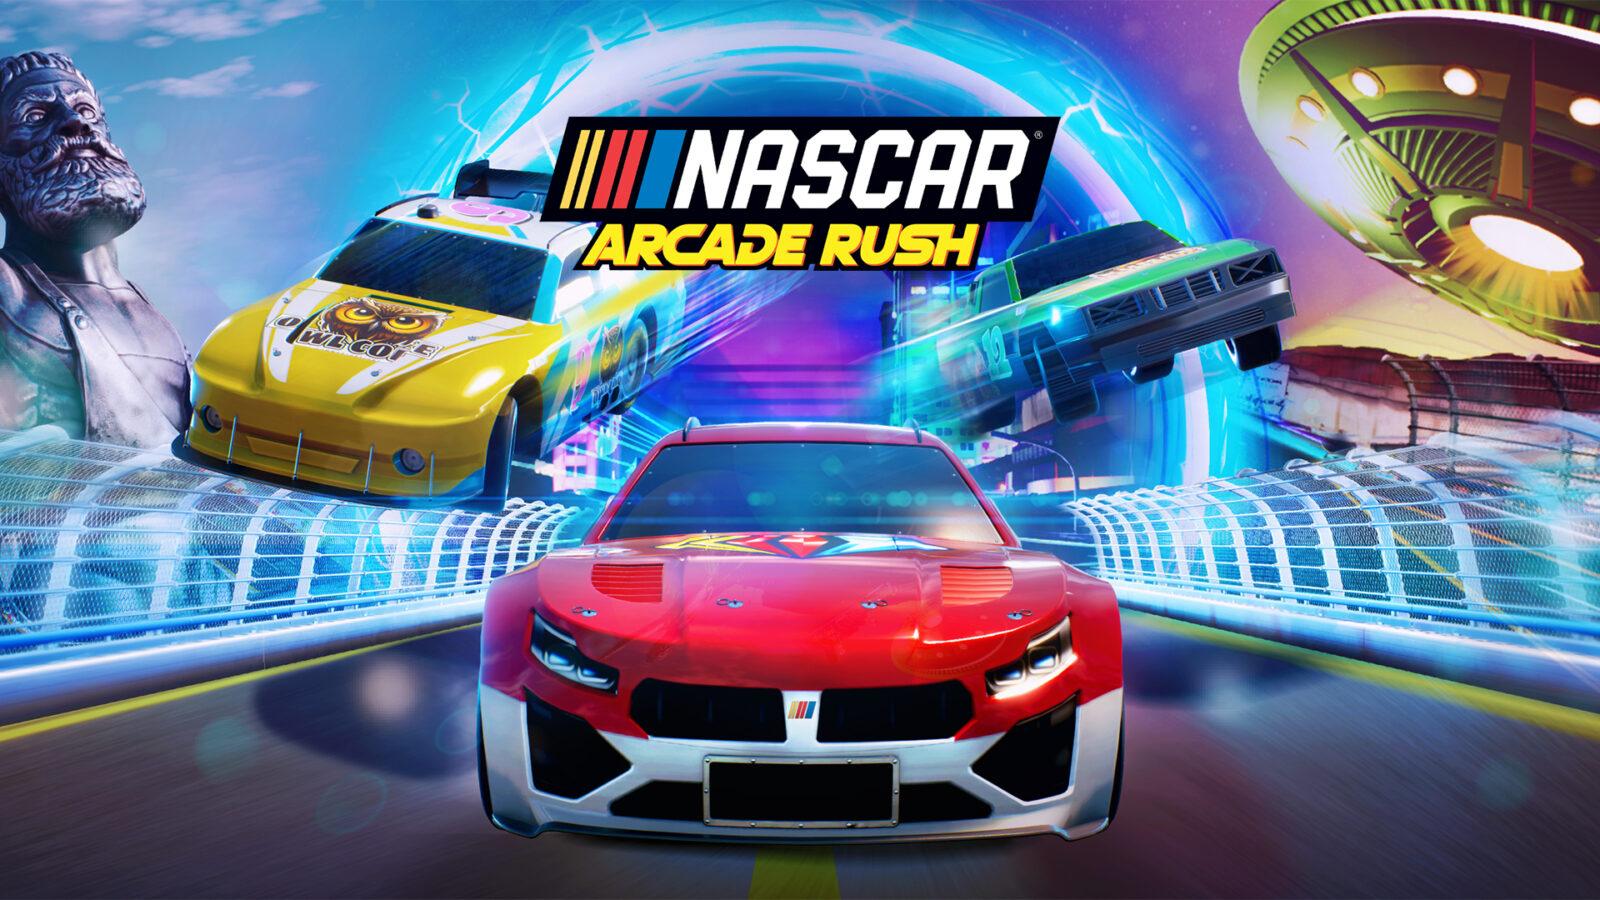 NASCAR Arcade Rush announced, coming in 2023 Traxion